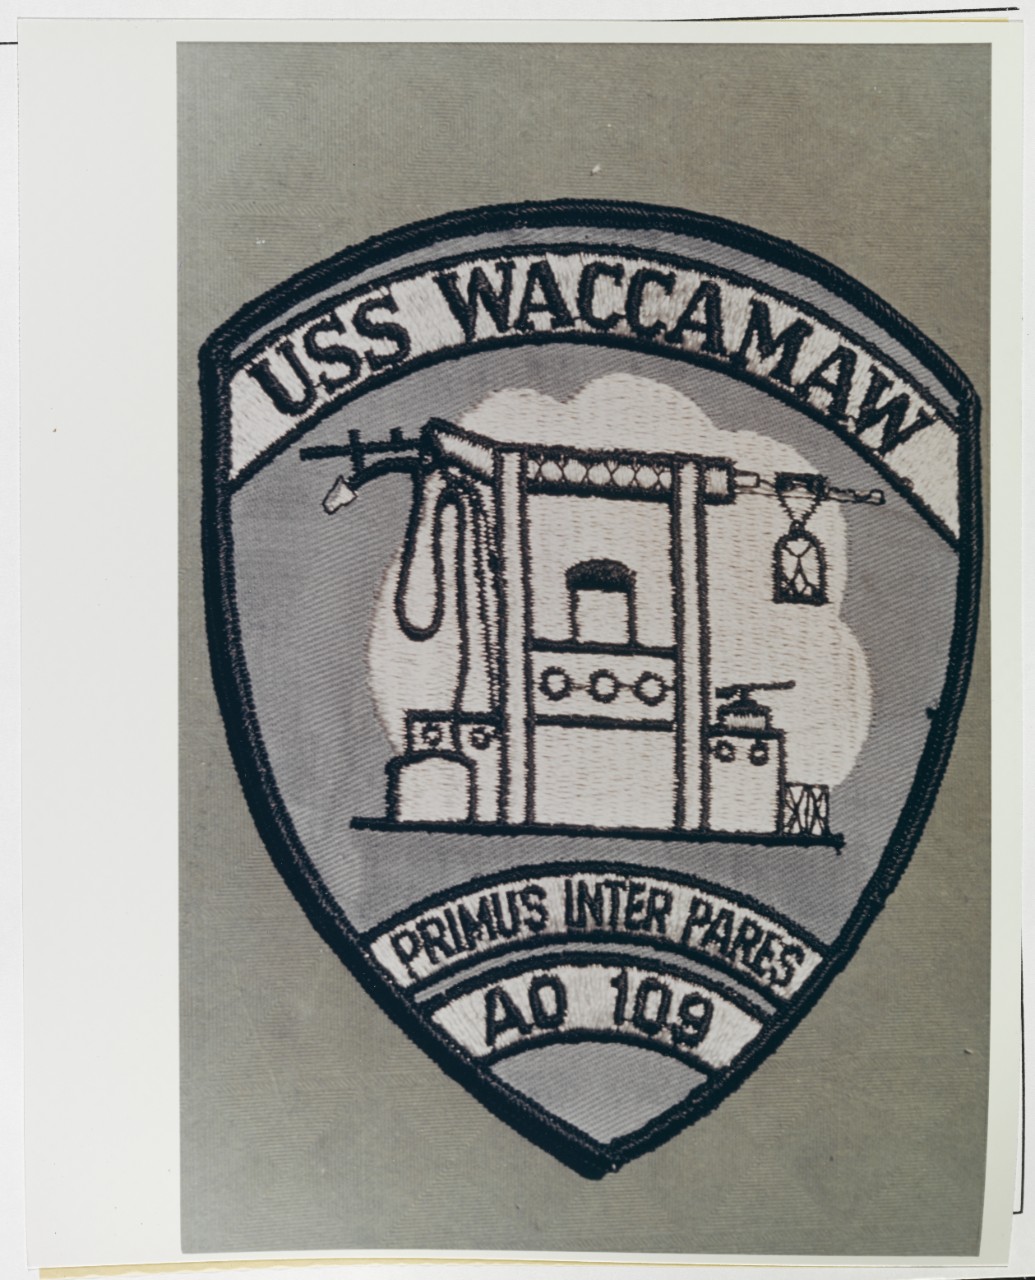 Insignia: USS WACCAMAW (AO-109)